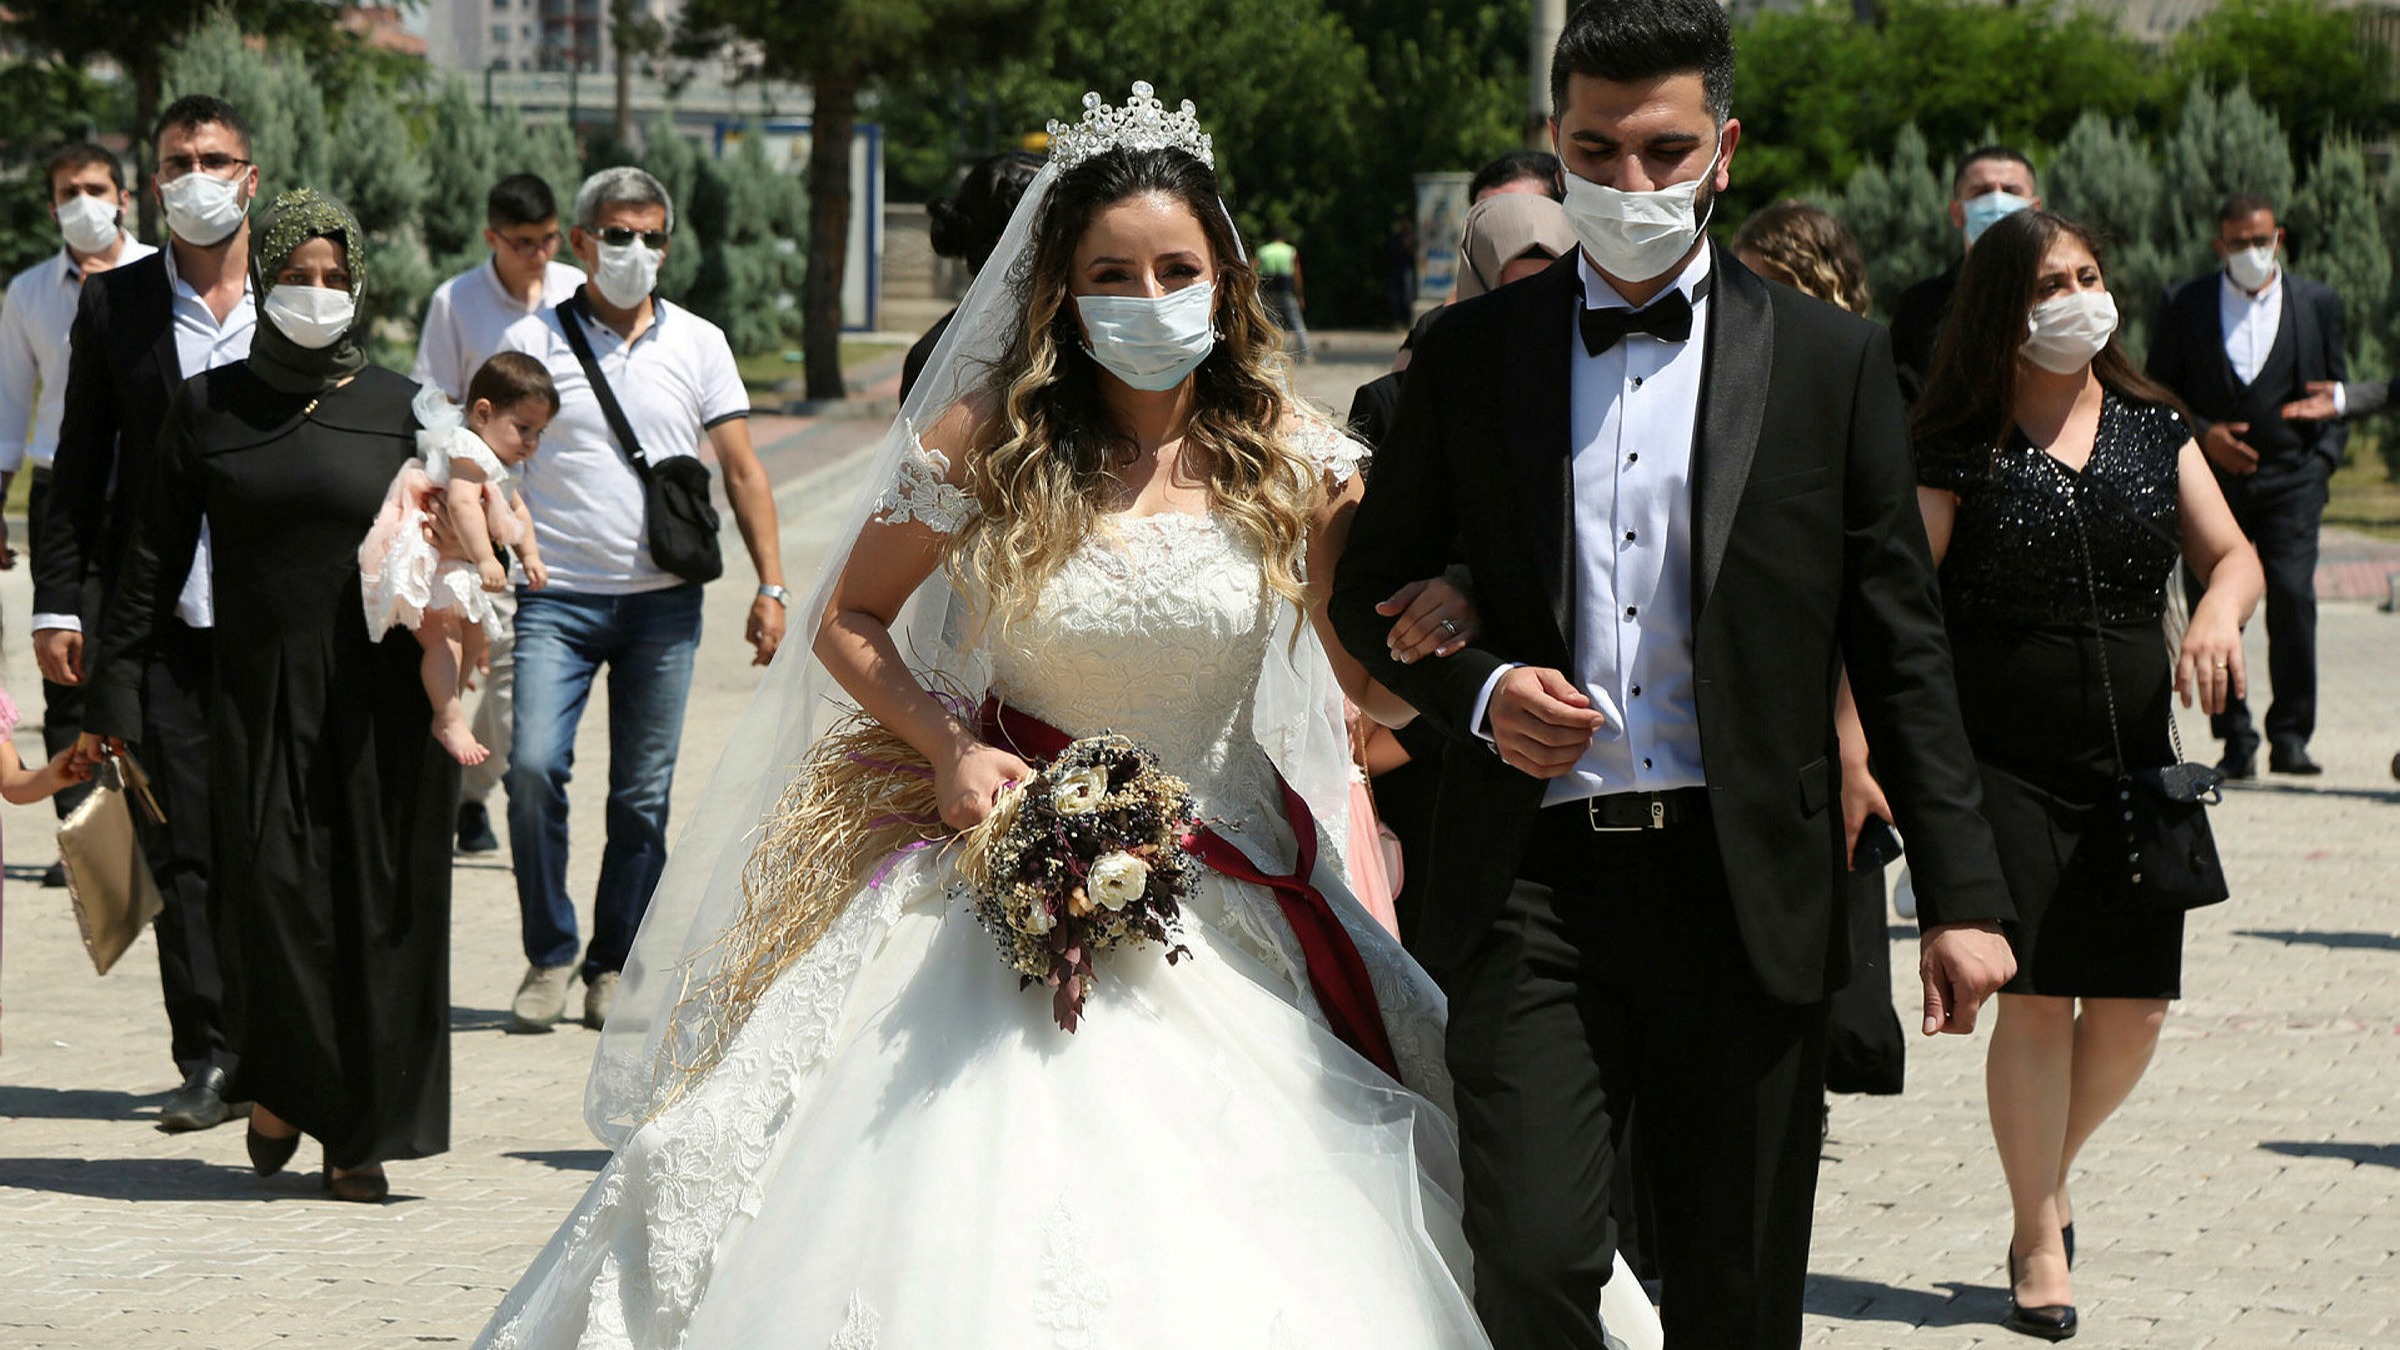 Turkey unveils unusual tactic to control virus: wedding inspectors |  Financial Times